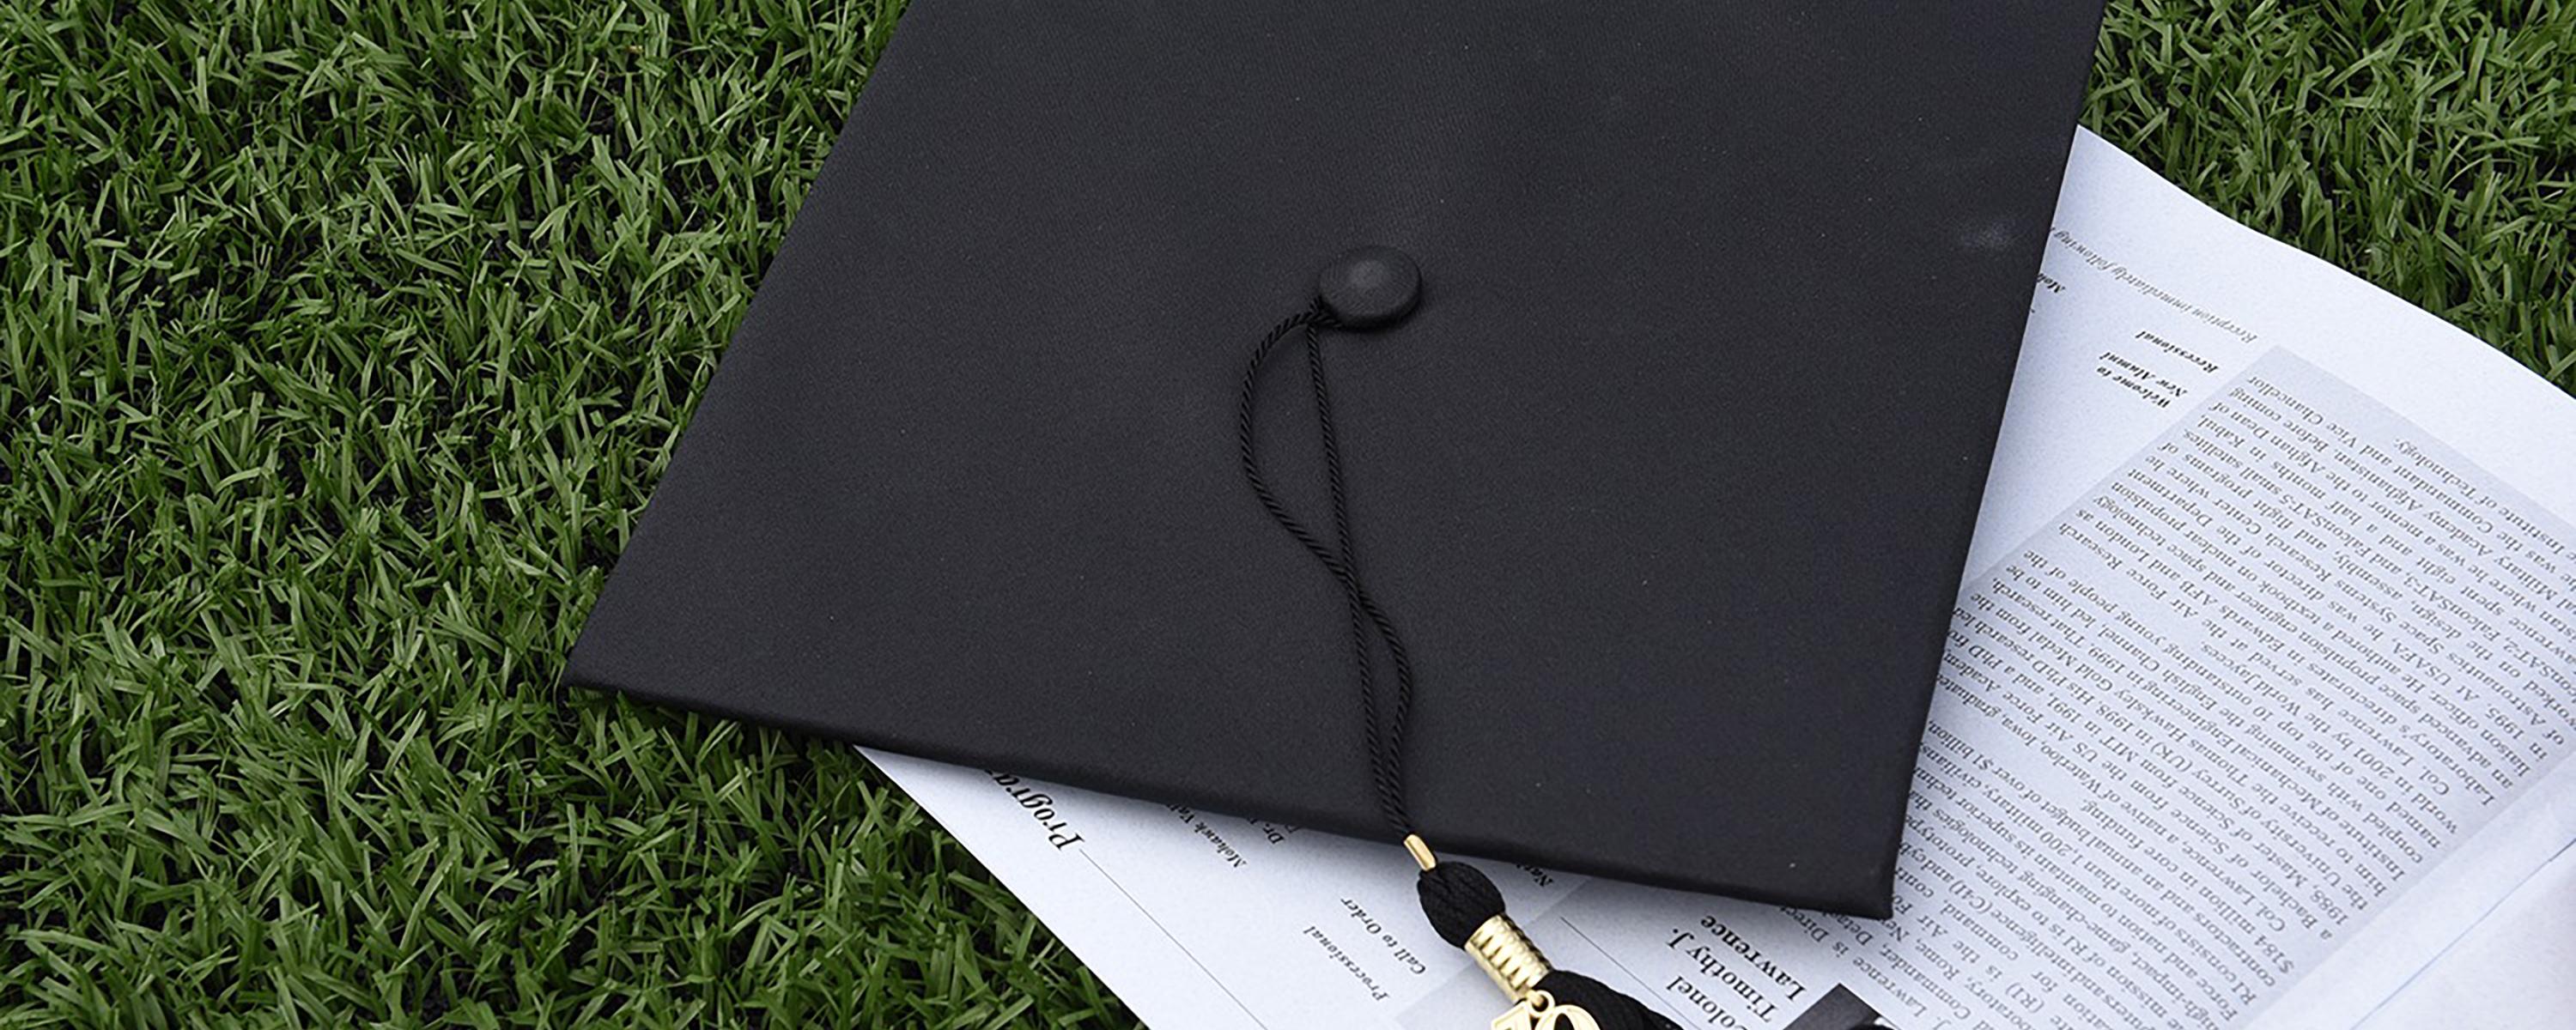 image of graduation cap and program on turf